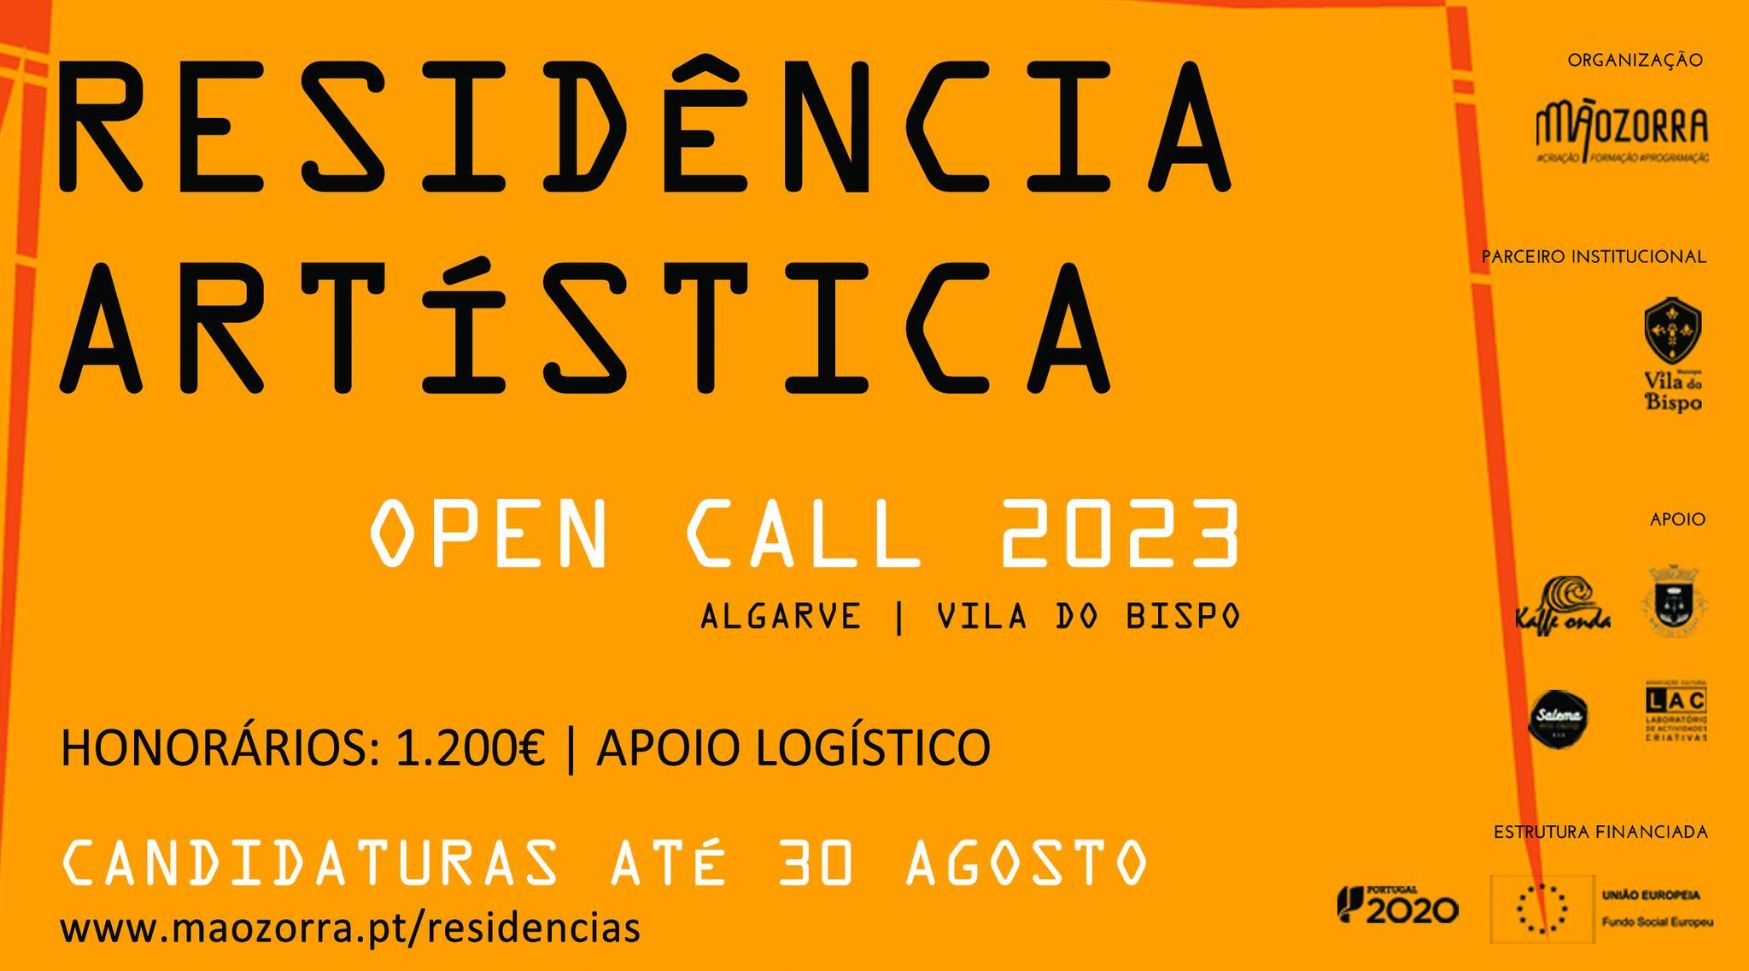 Mãozorra - Teatro de Marionetas - Residência Artística – Open Call 2023 – Algarve, Vila do Bispo